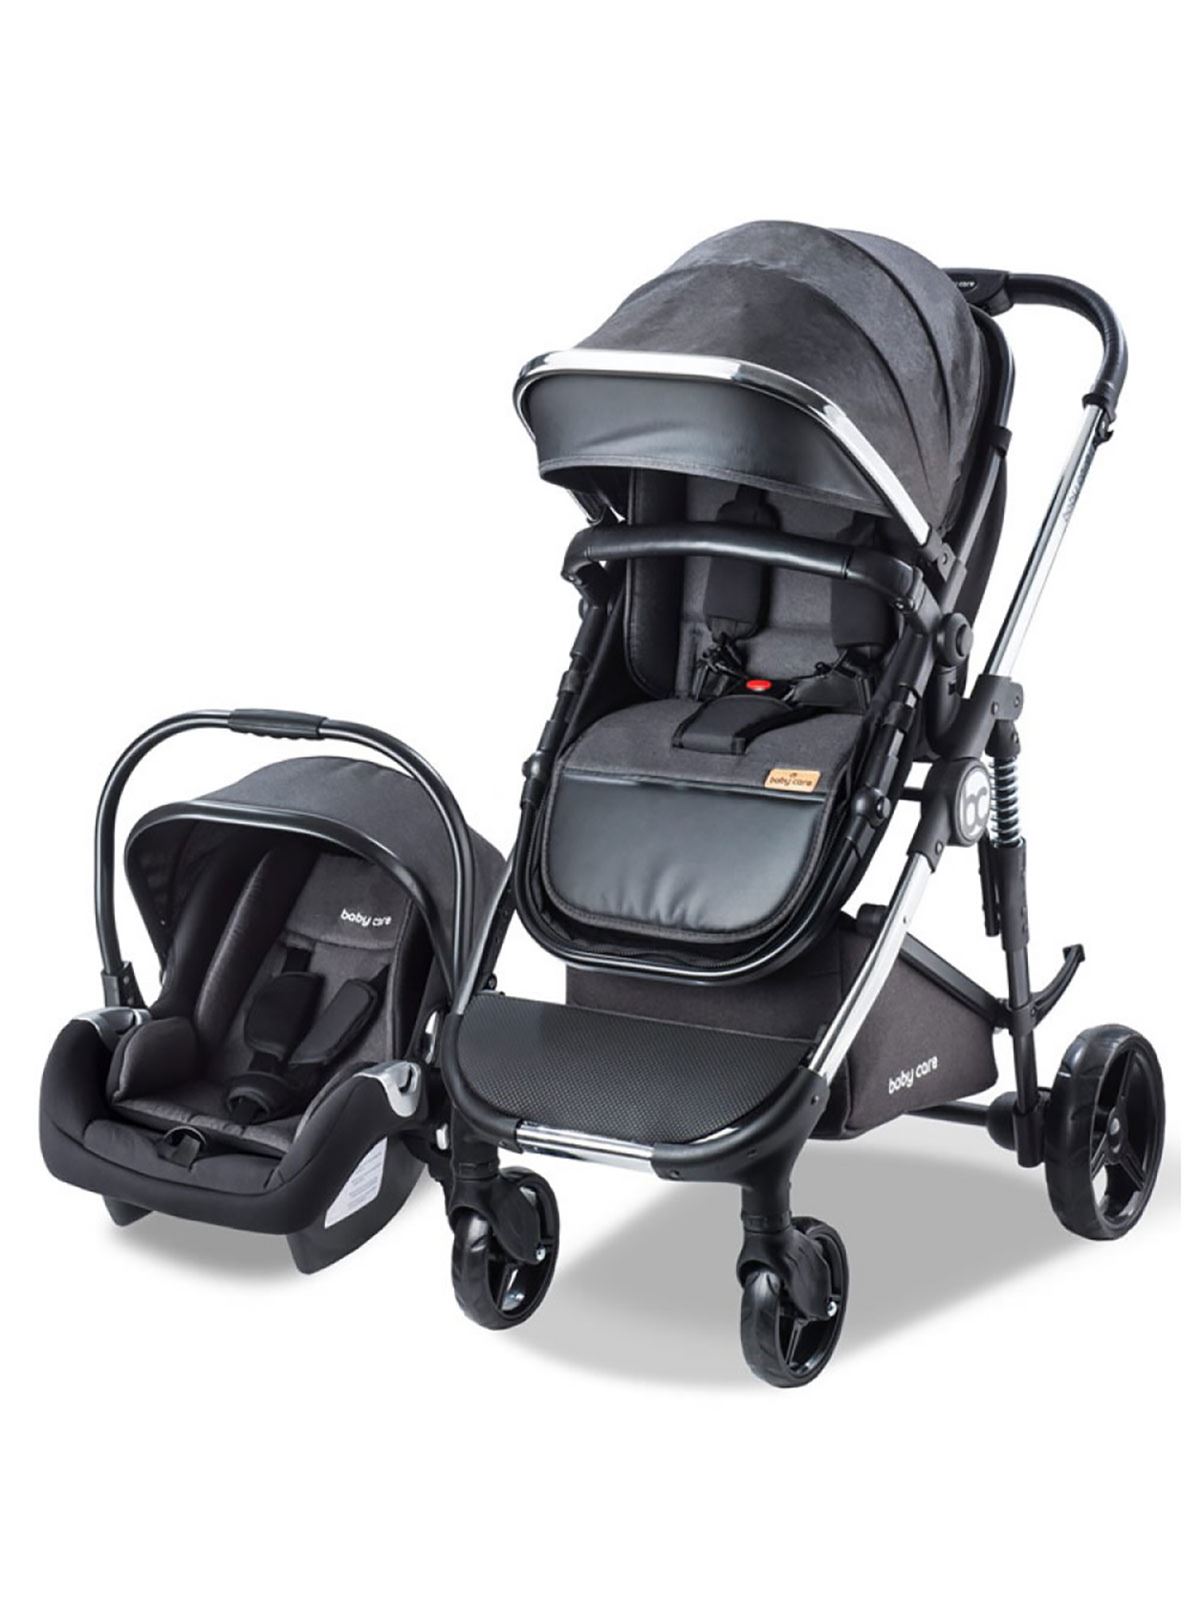 Babycare Colarado Chrome Travel Sistem Bebek Arabası Siyah